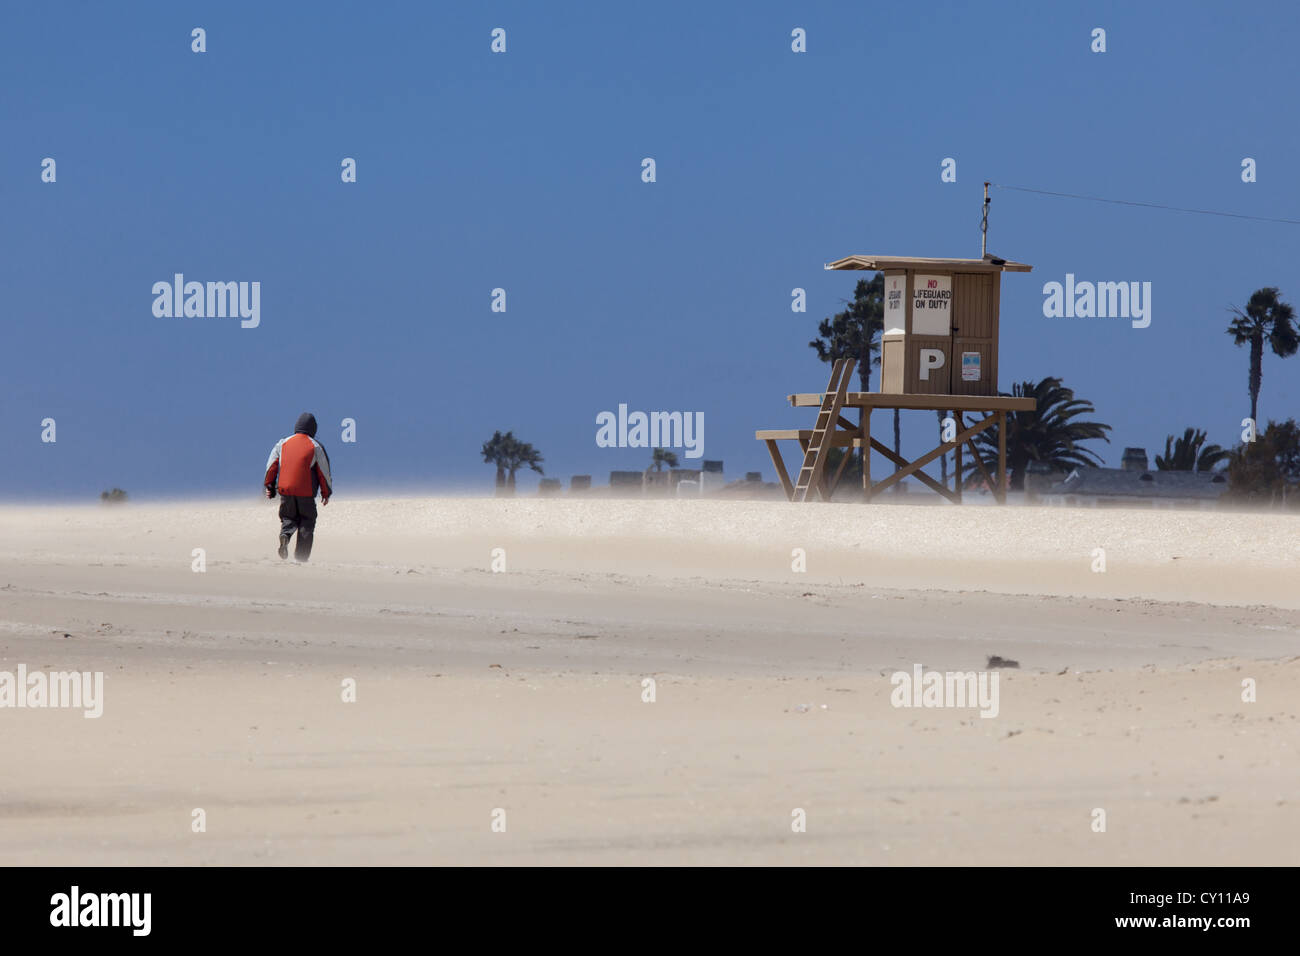 Einsame Person entlang der Strand mit Sand weht an windigen Tag Balboa Halbinsel, Newport Beach, Southern California, USA Stockfoto